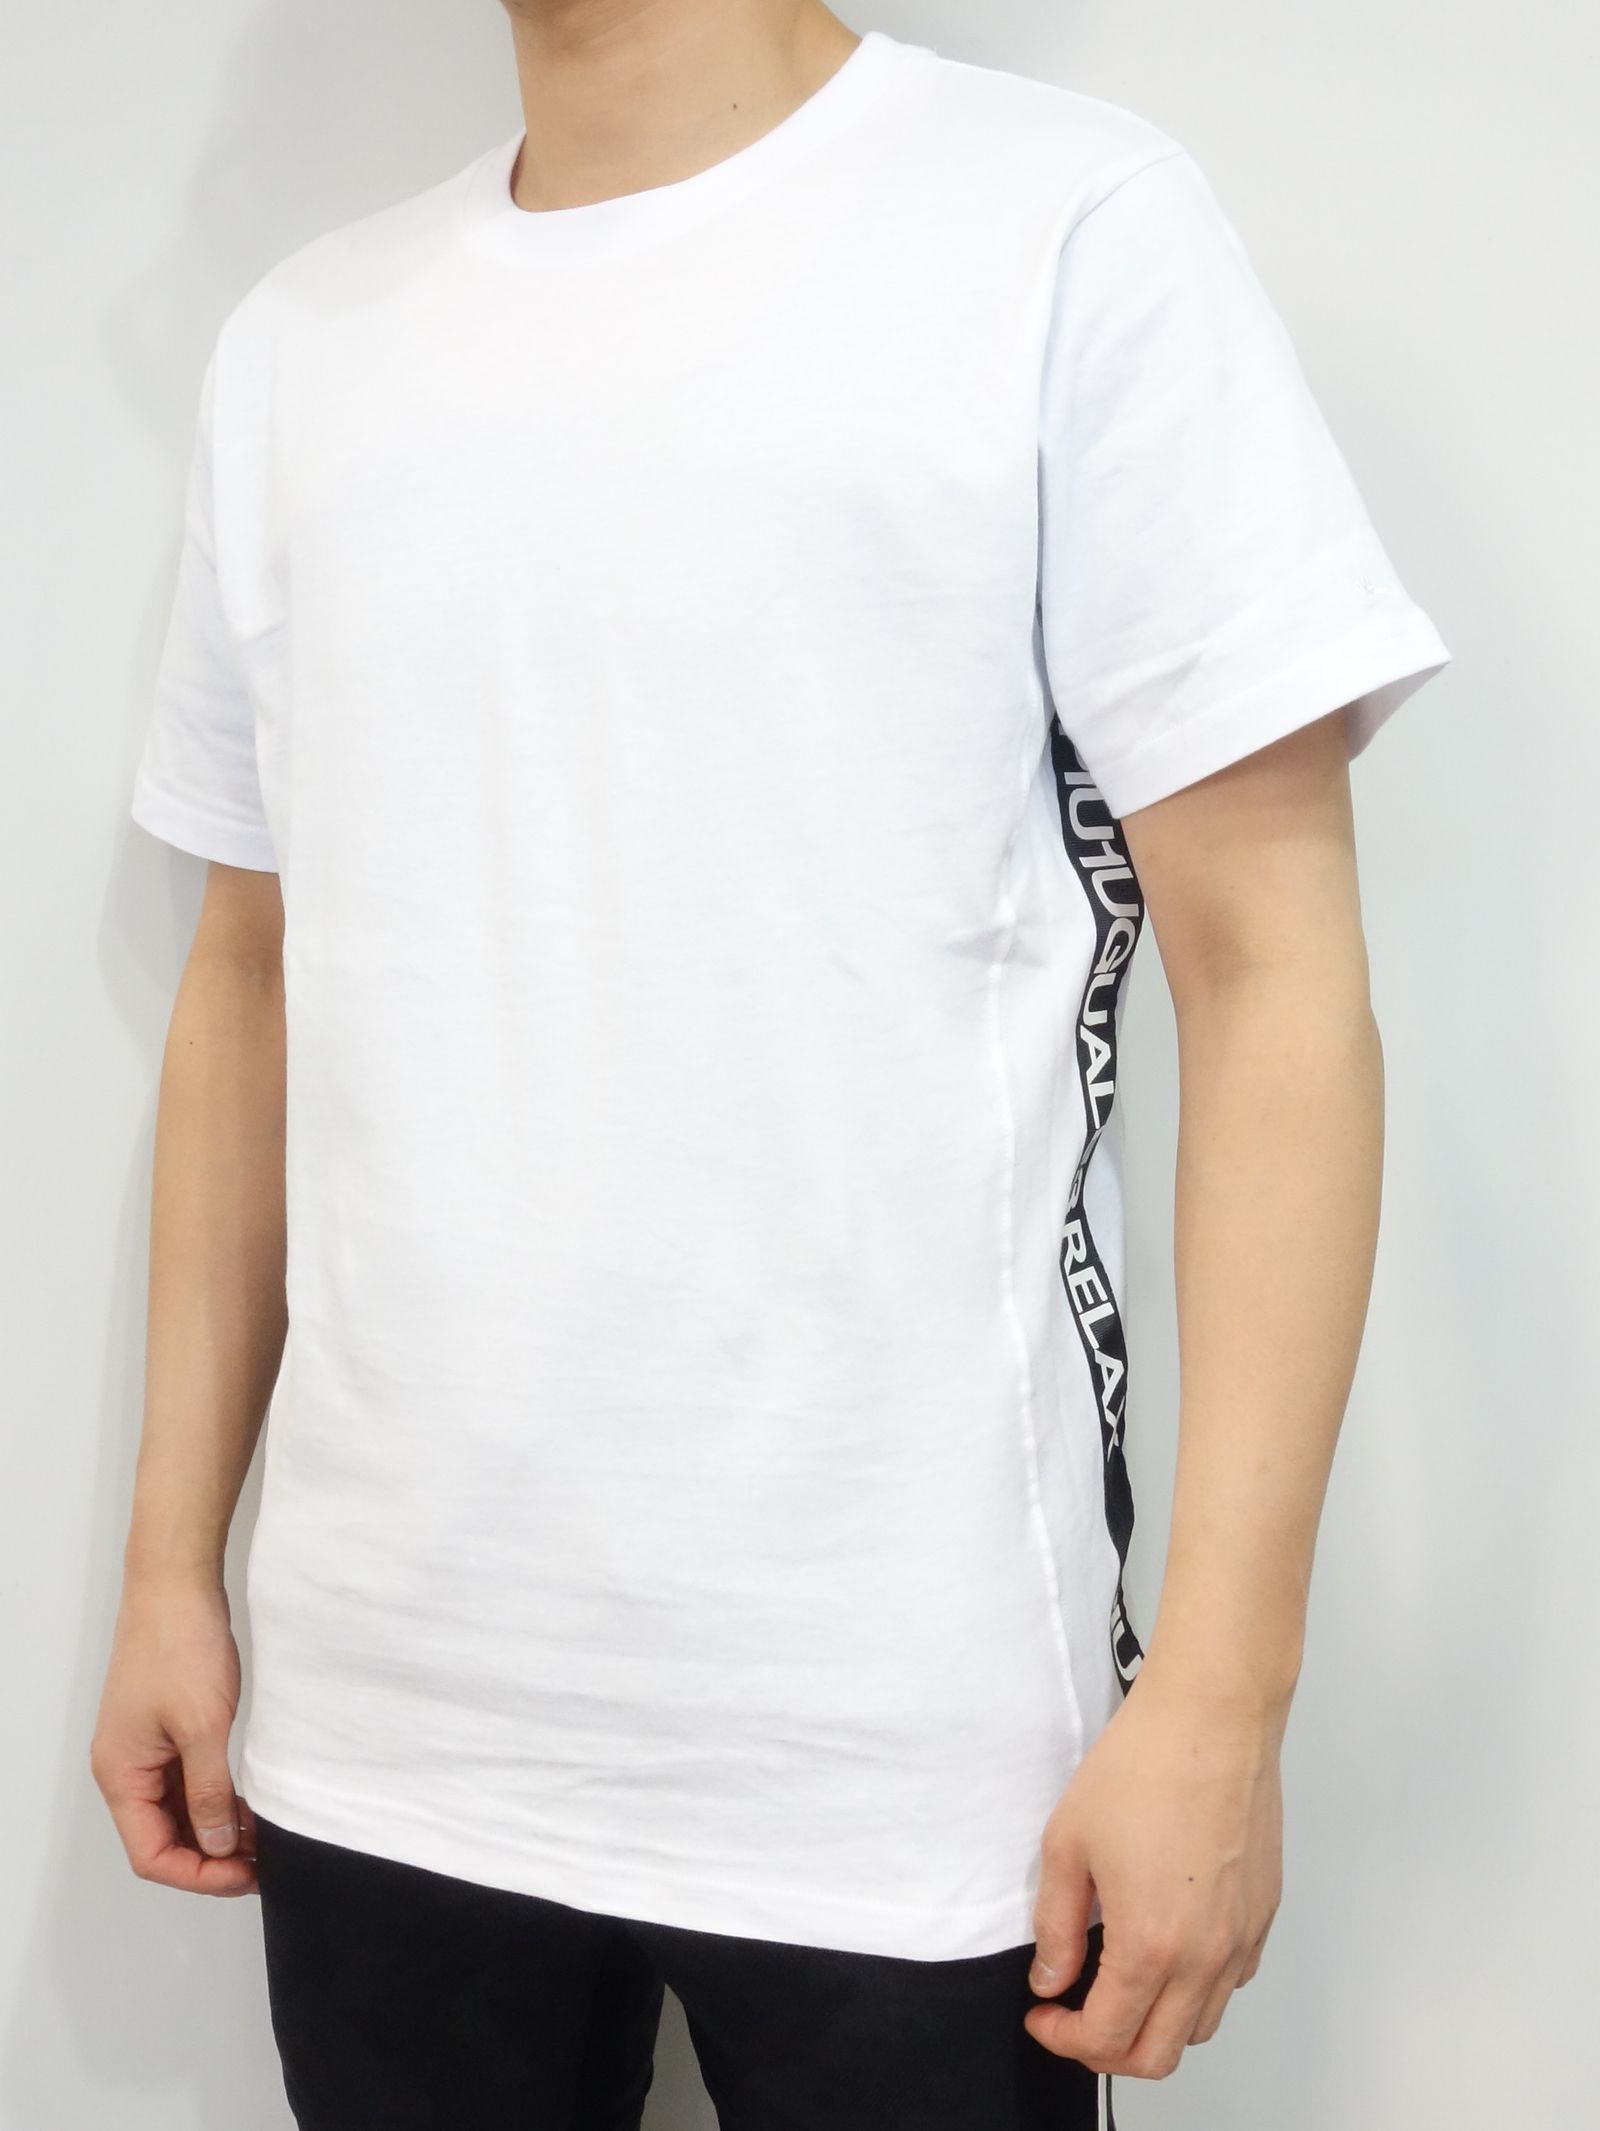 1PIU1UGUALE3 RELAX - サイドラインテープロゴ半袖Tシャツ / ust-21004